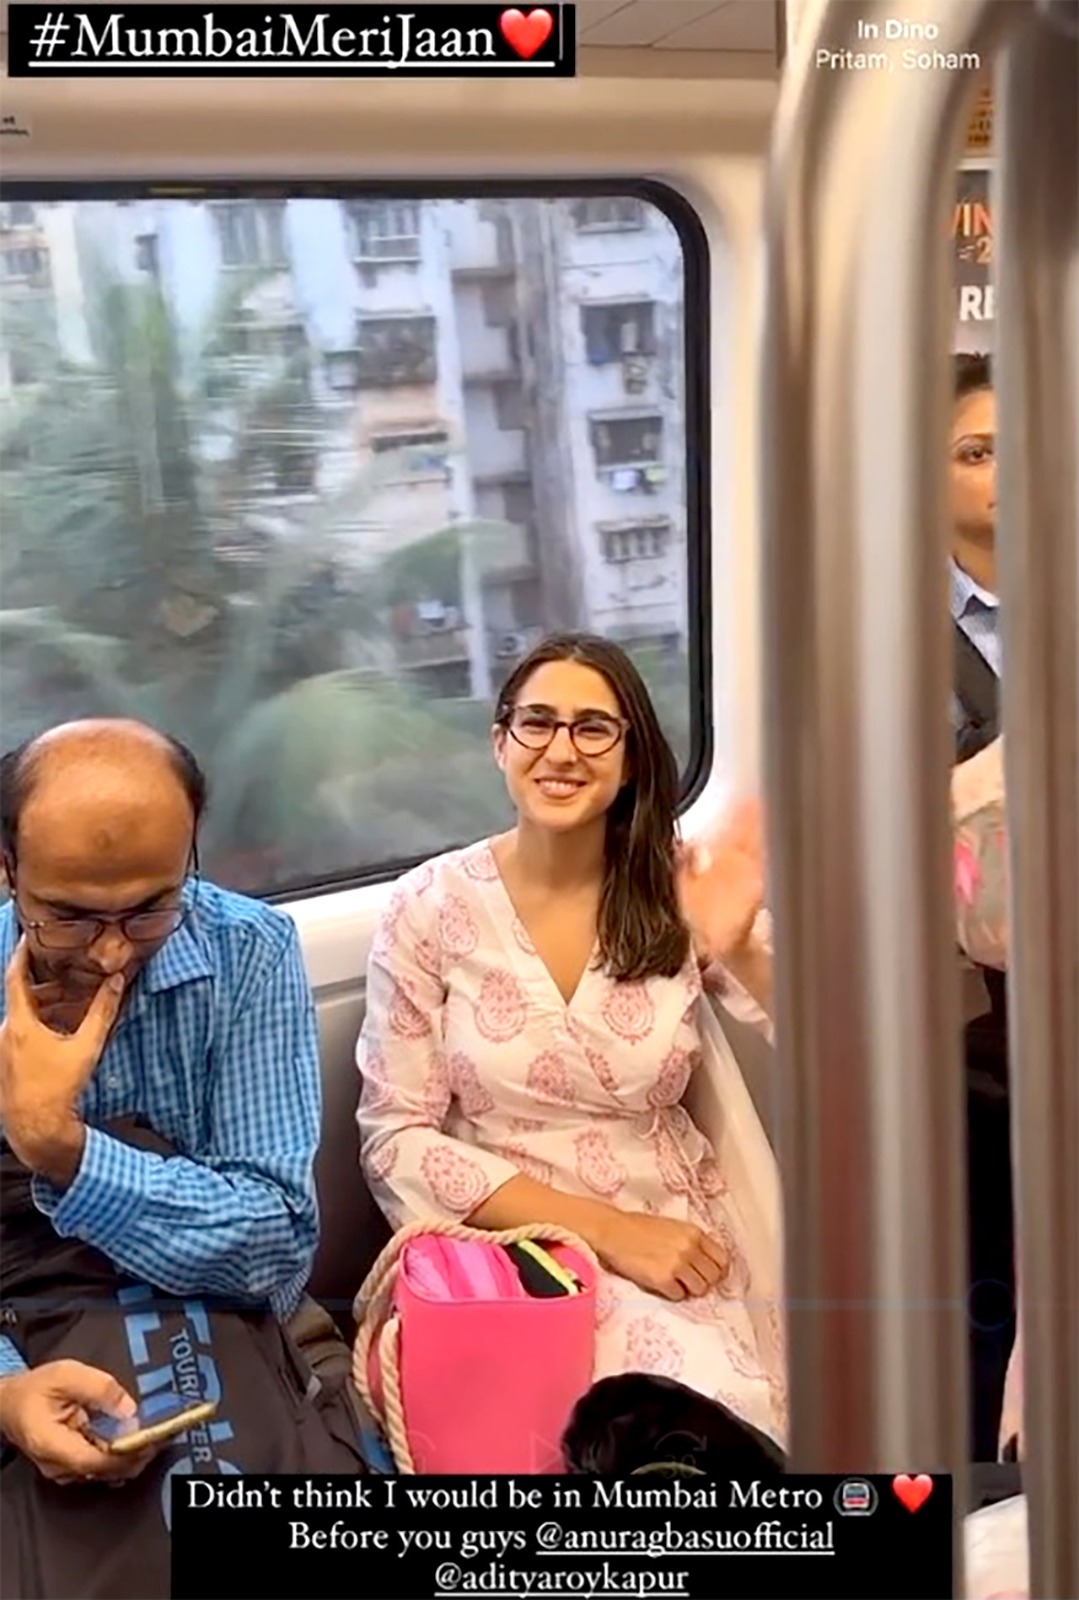 Sara Ali Khan travels in Mumbai Metro; dedicates post to Metro In Dino co-stars Aditya Roy Kapur and Anurag Basu